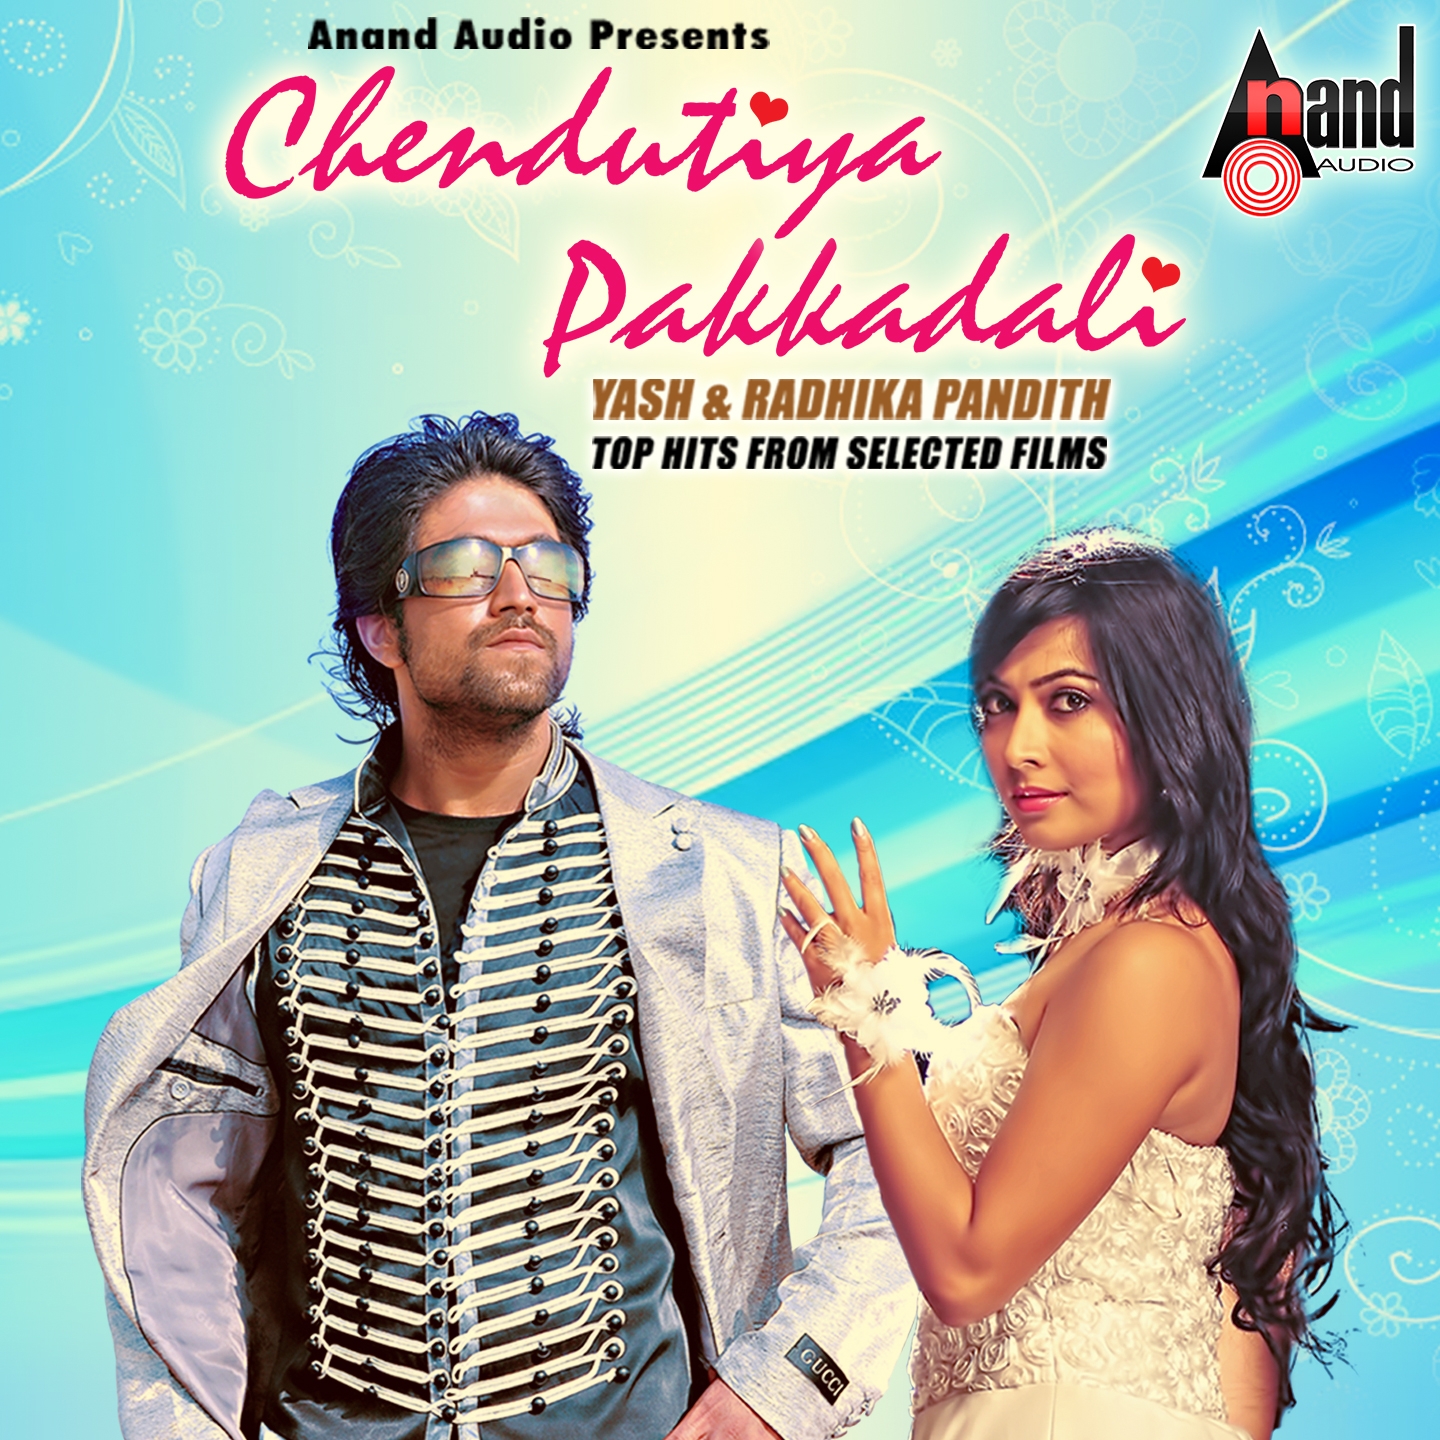 Chendutiya Pakkadali (From "Drama")